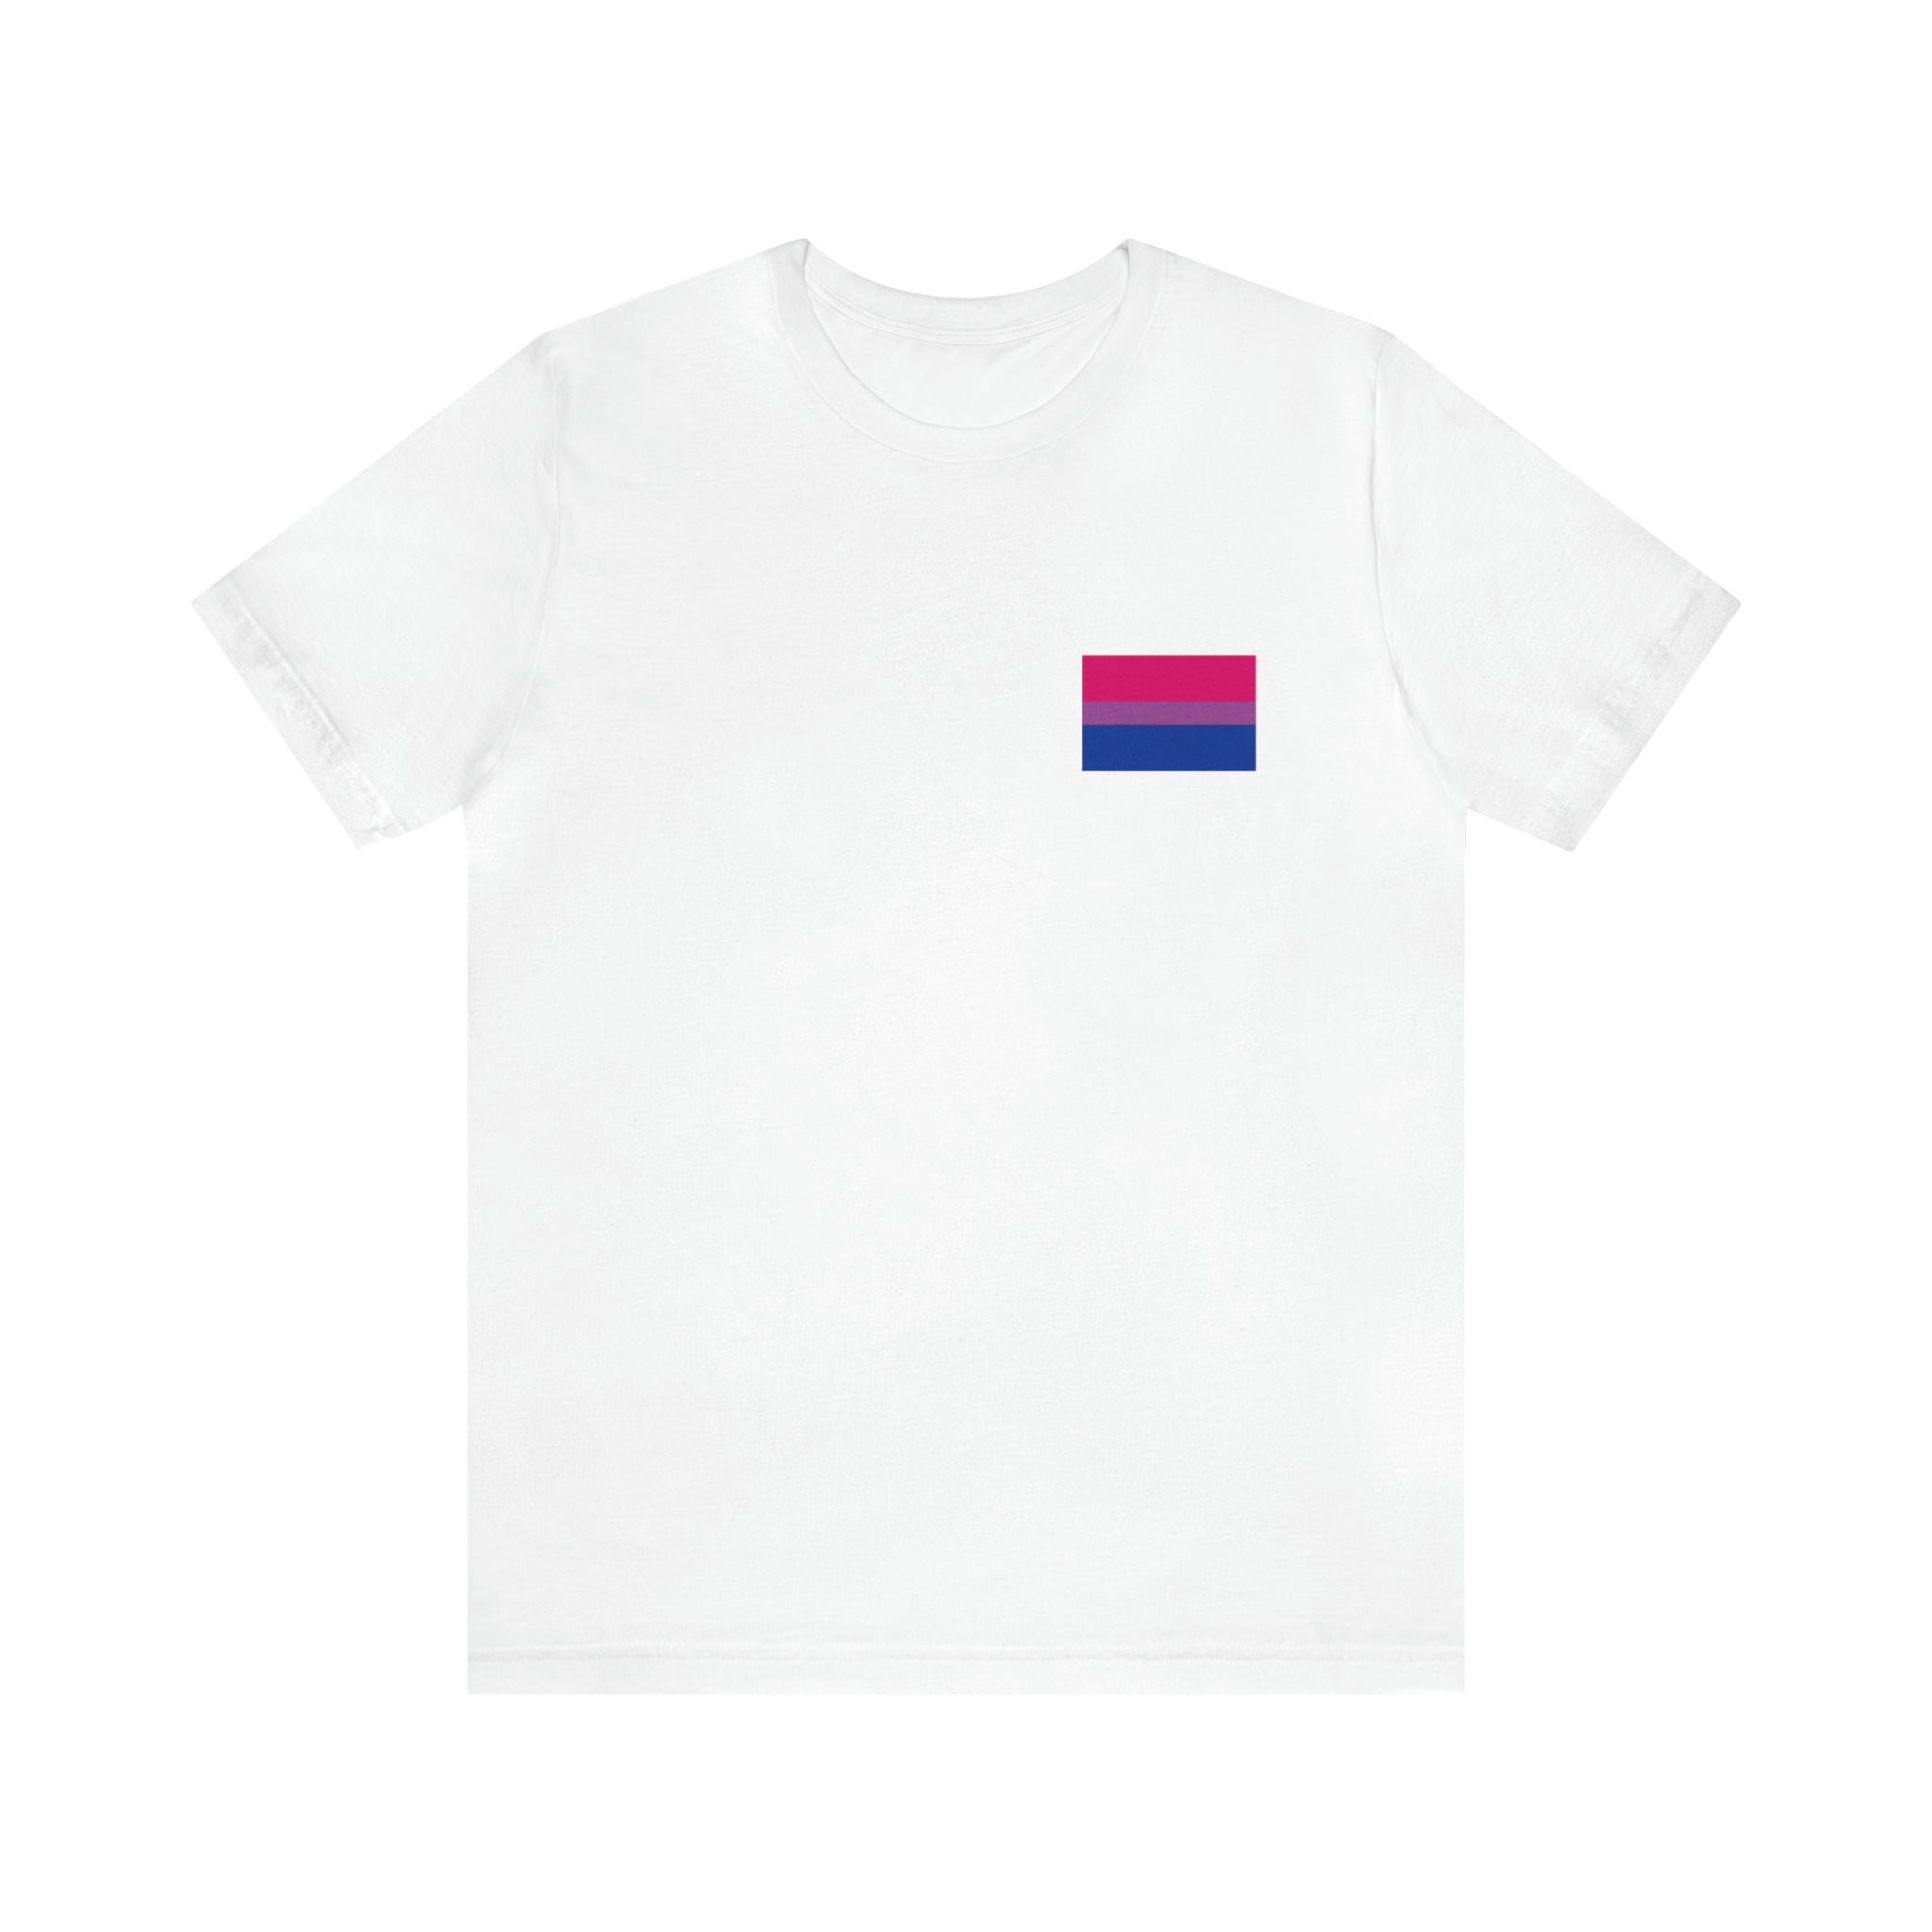 Bisexual Pride Flag : Unisex 100% Comfy Cotton T-Shirt by Bella+Canvas